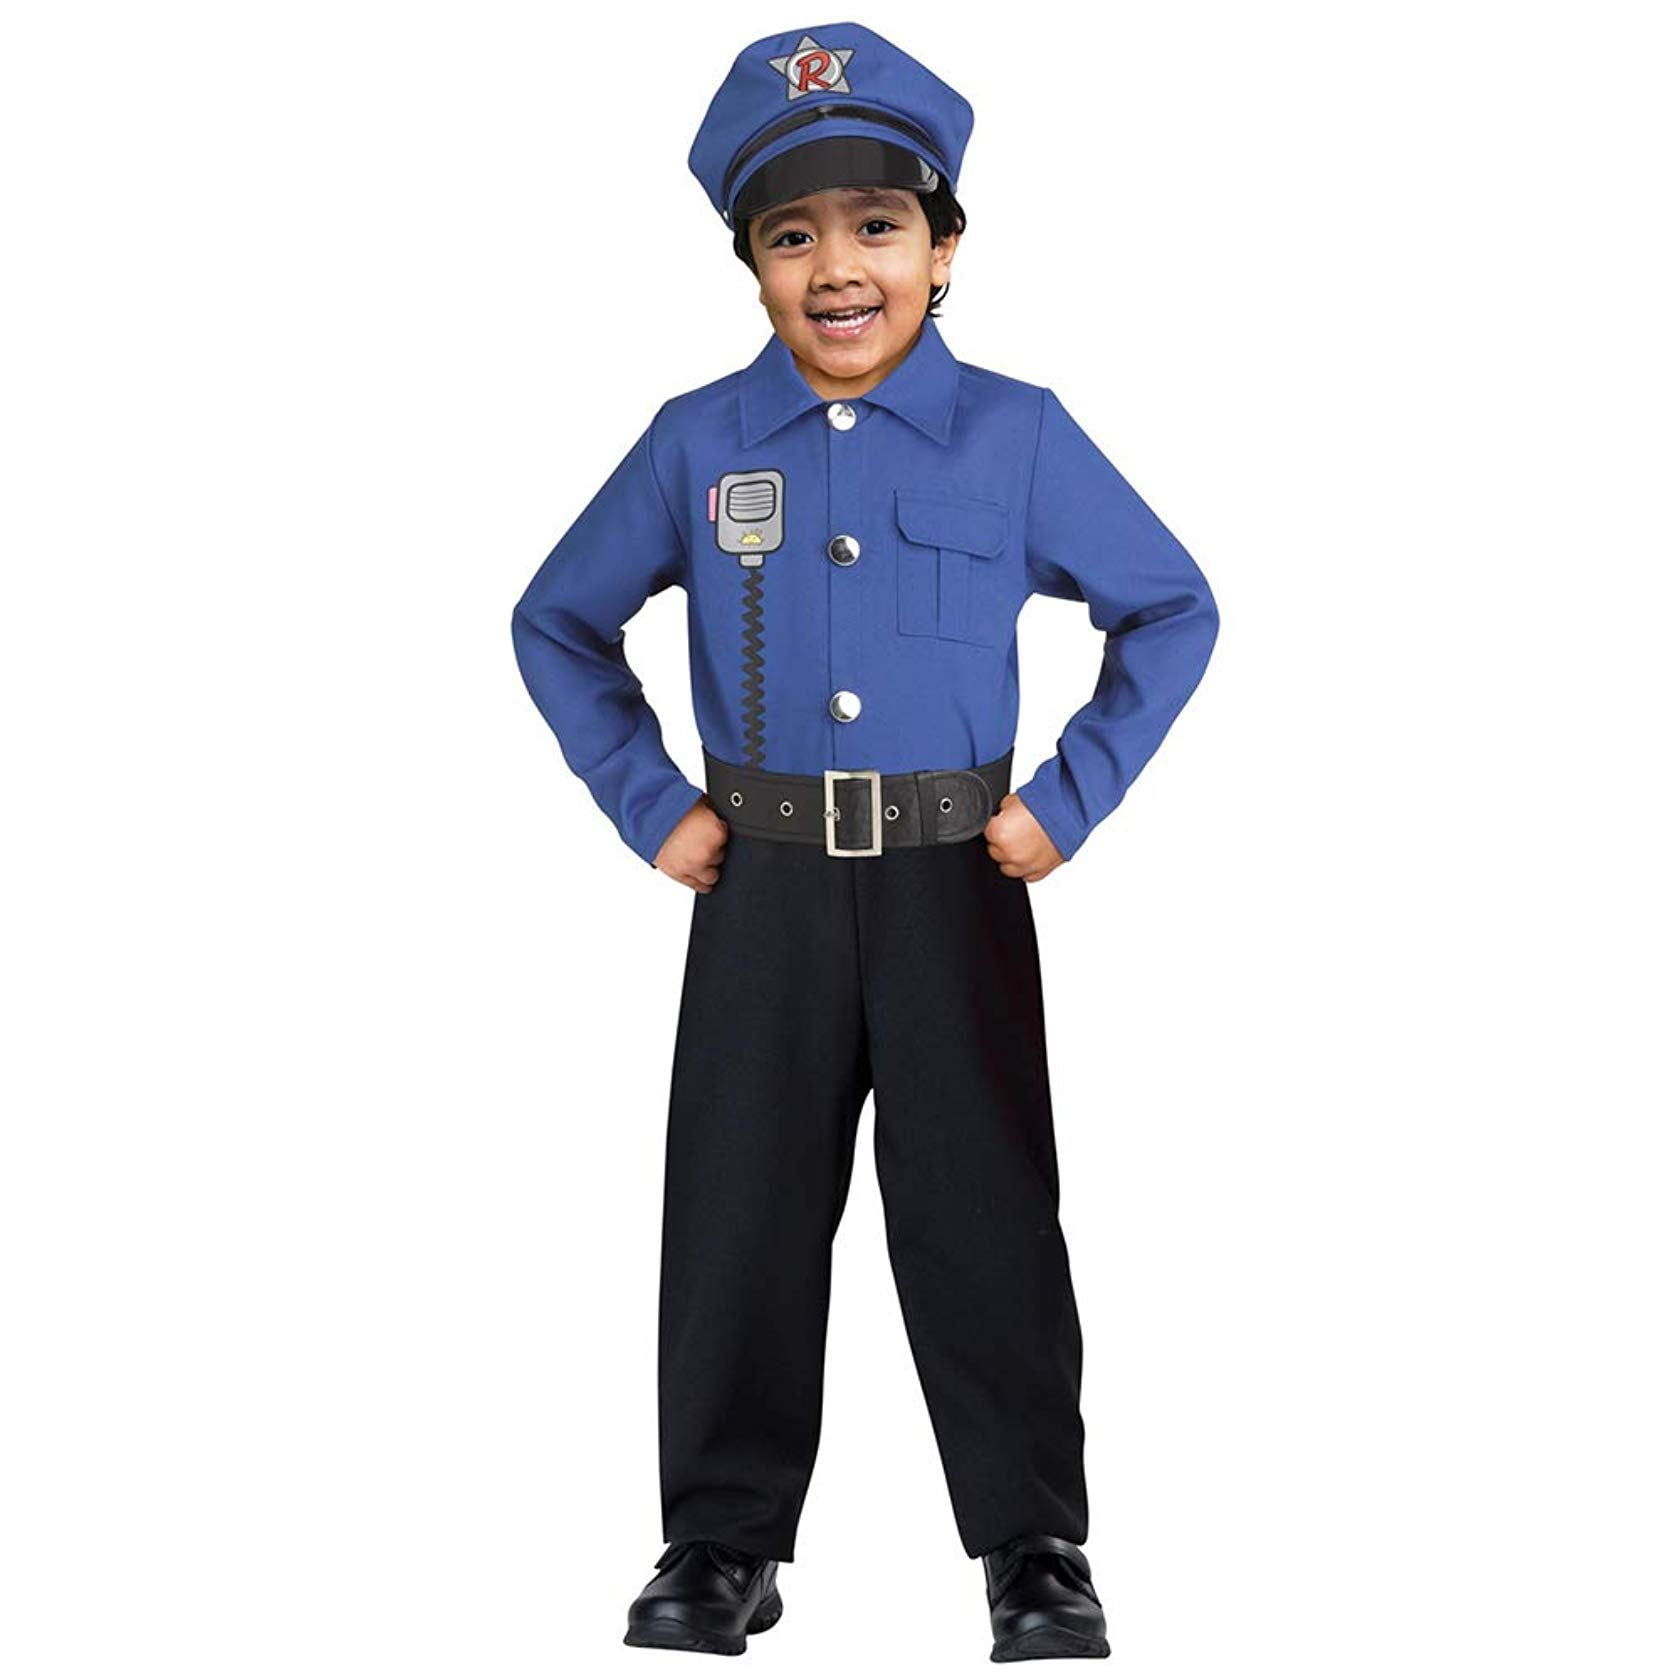 Kids Ryan's World Sound FX Police Officer Costume sz Medium 3T-4T